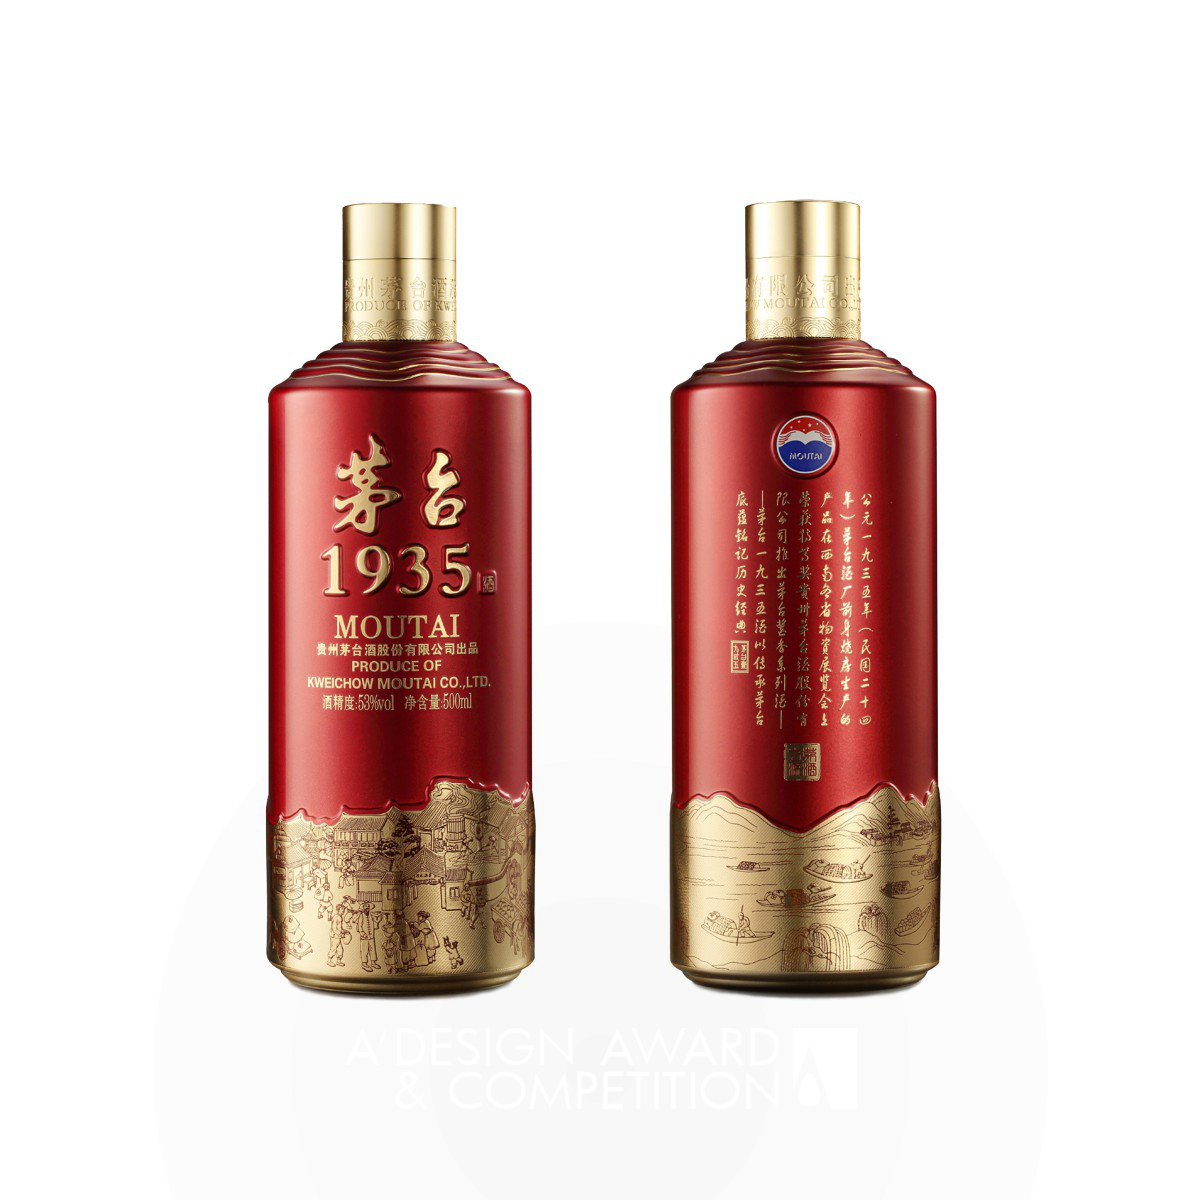 Chengdu Wanjiazu Technology Co., Ltd wins Golden at the prestigious A' Packaging Design Award with Moutai 1935 Liquor Packaging.